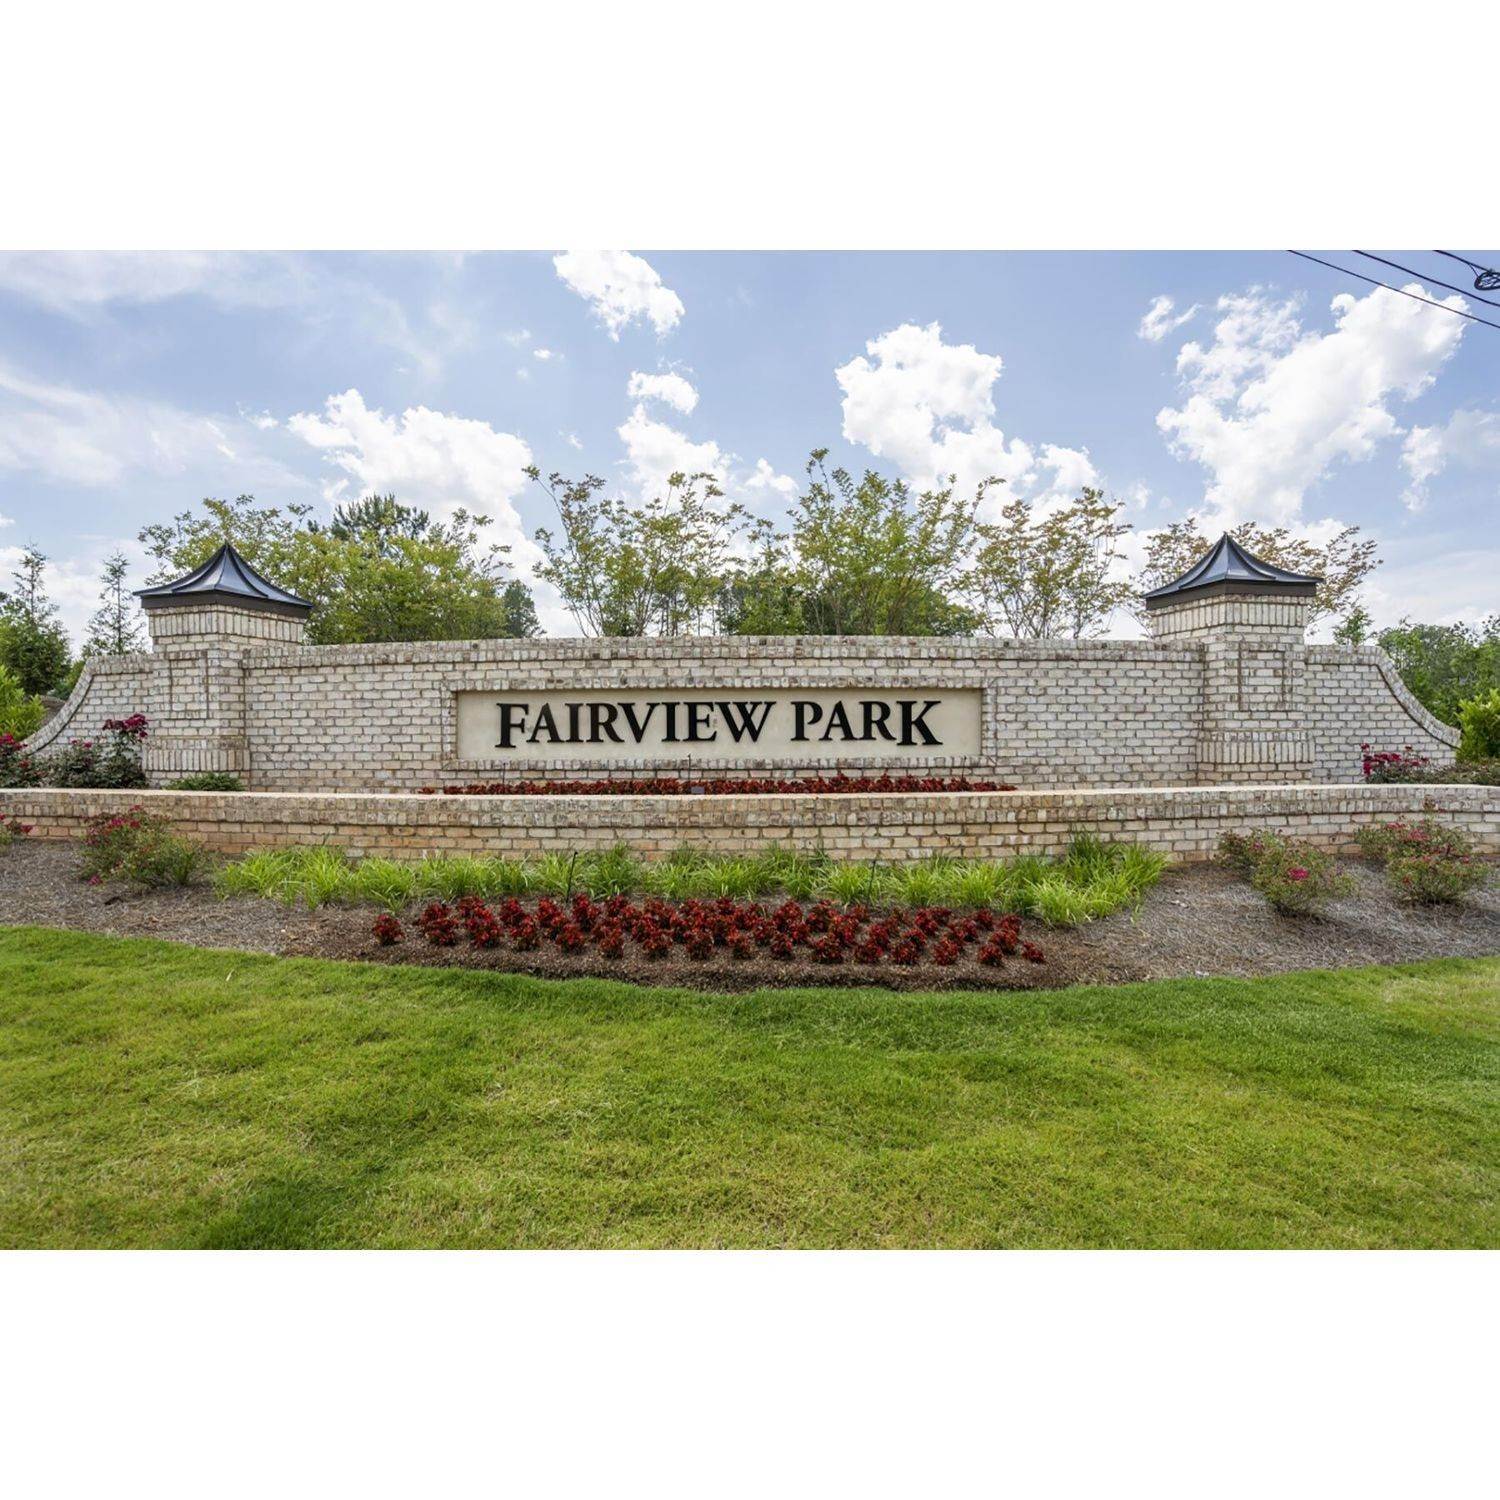 3. Fairview Park building at 1016 Manchaca Loop, Apex, NC 27539